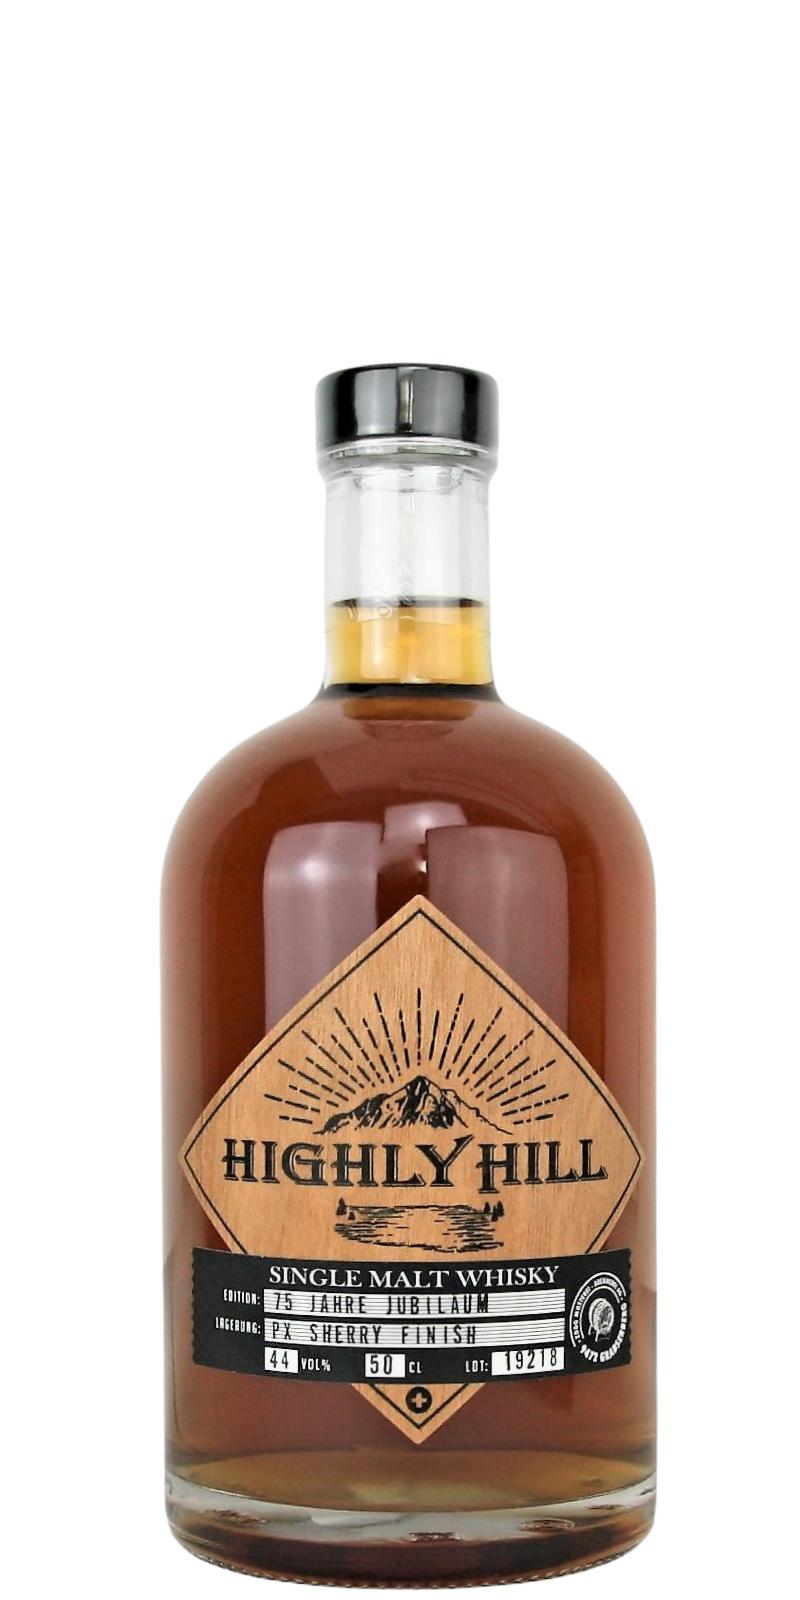 Highly Hill Single Malt Whisky 75yo Jubilaum PX Sherry Finish 44% 500ml